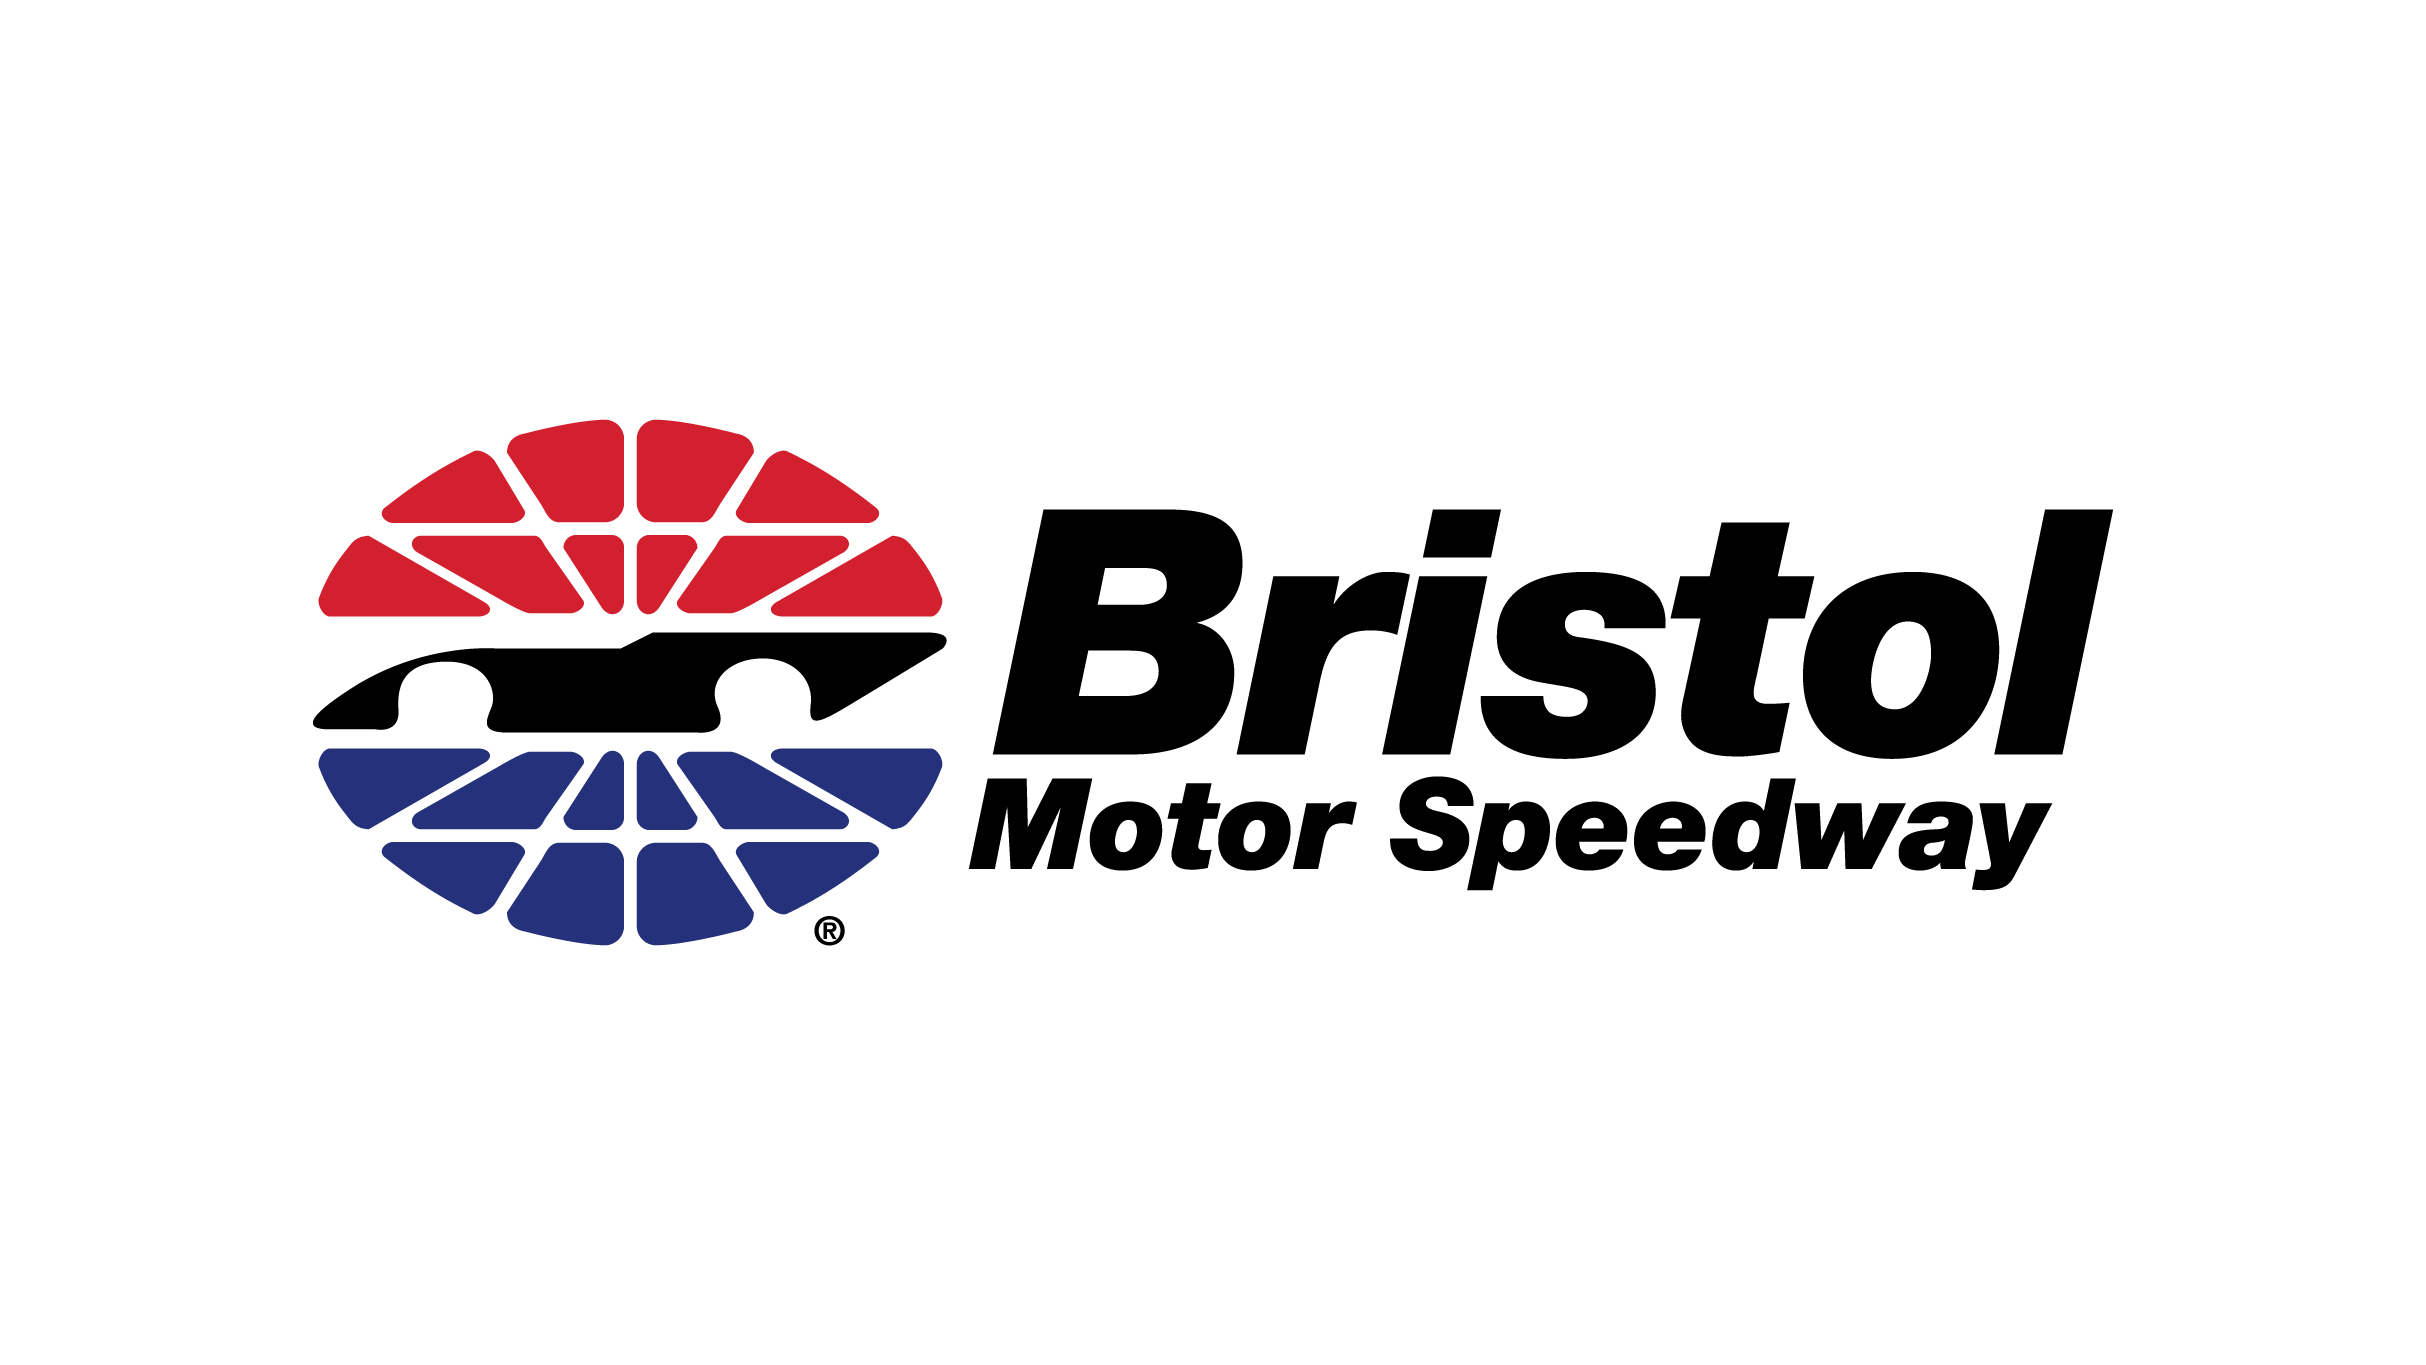 Bass Pro Shops Night Race at Bristol Motor Speedway